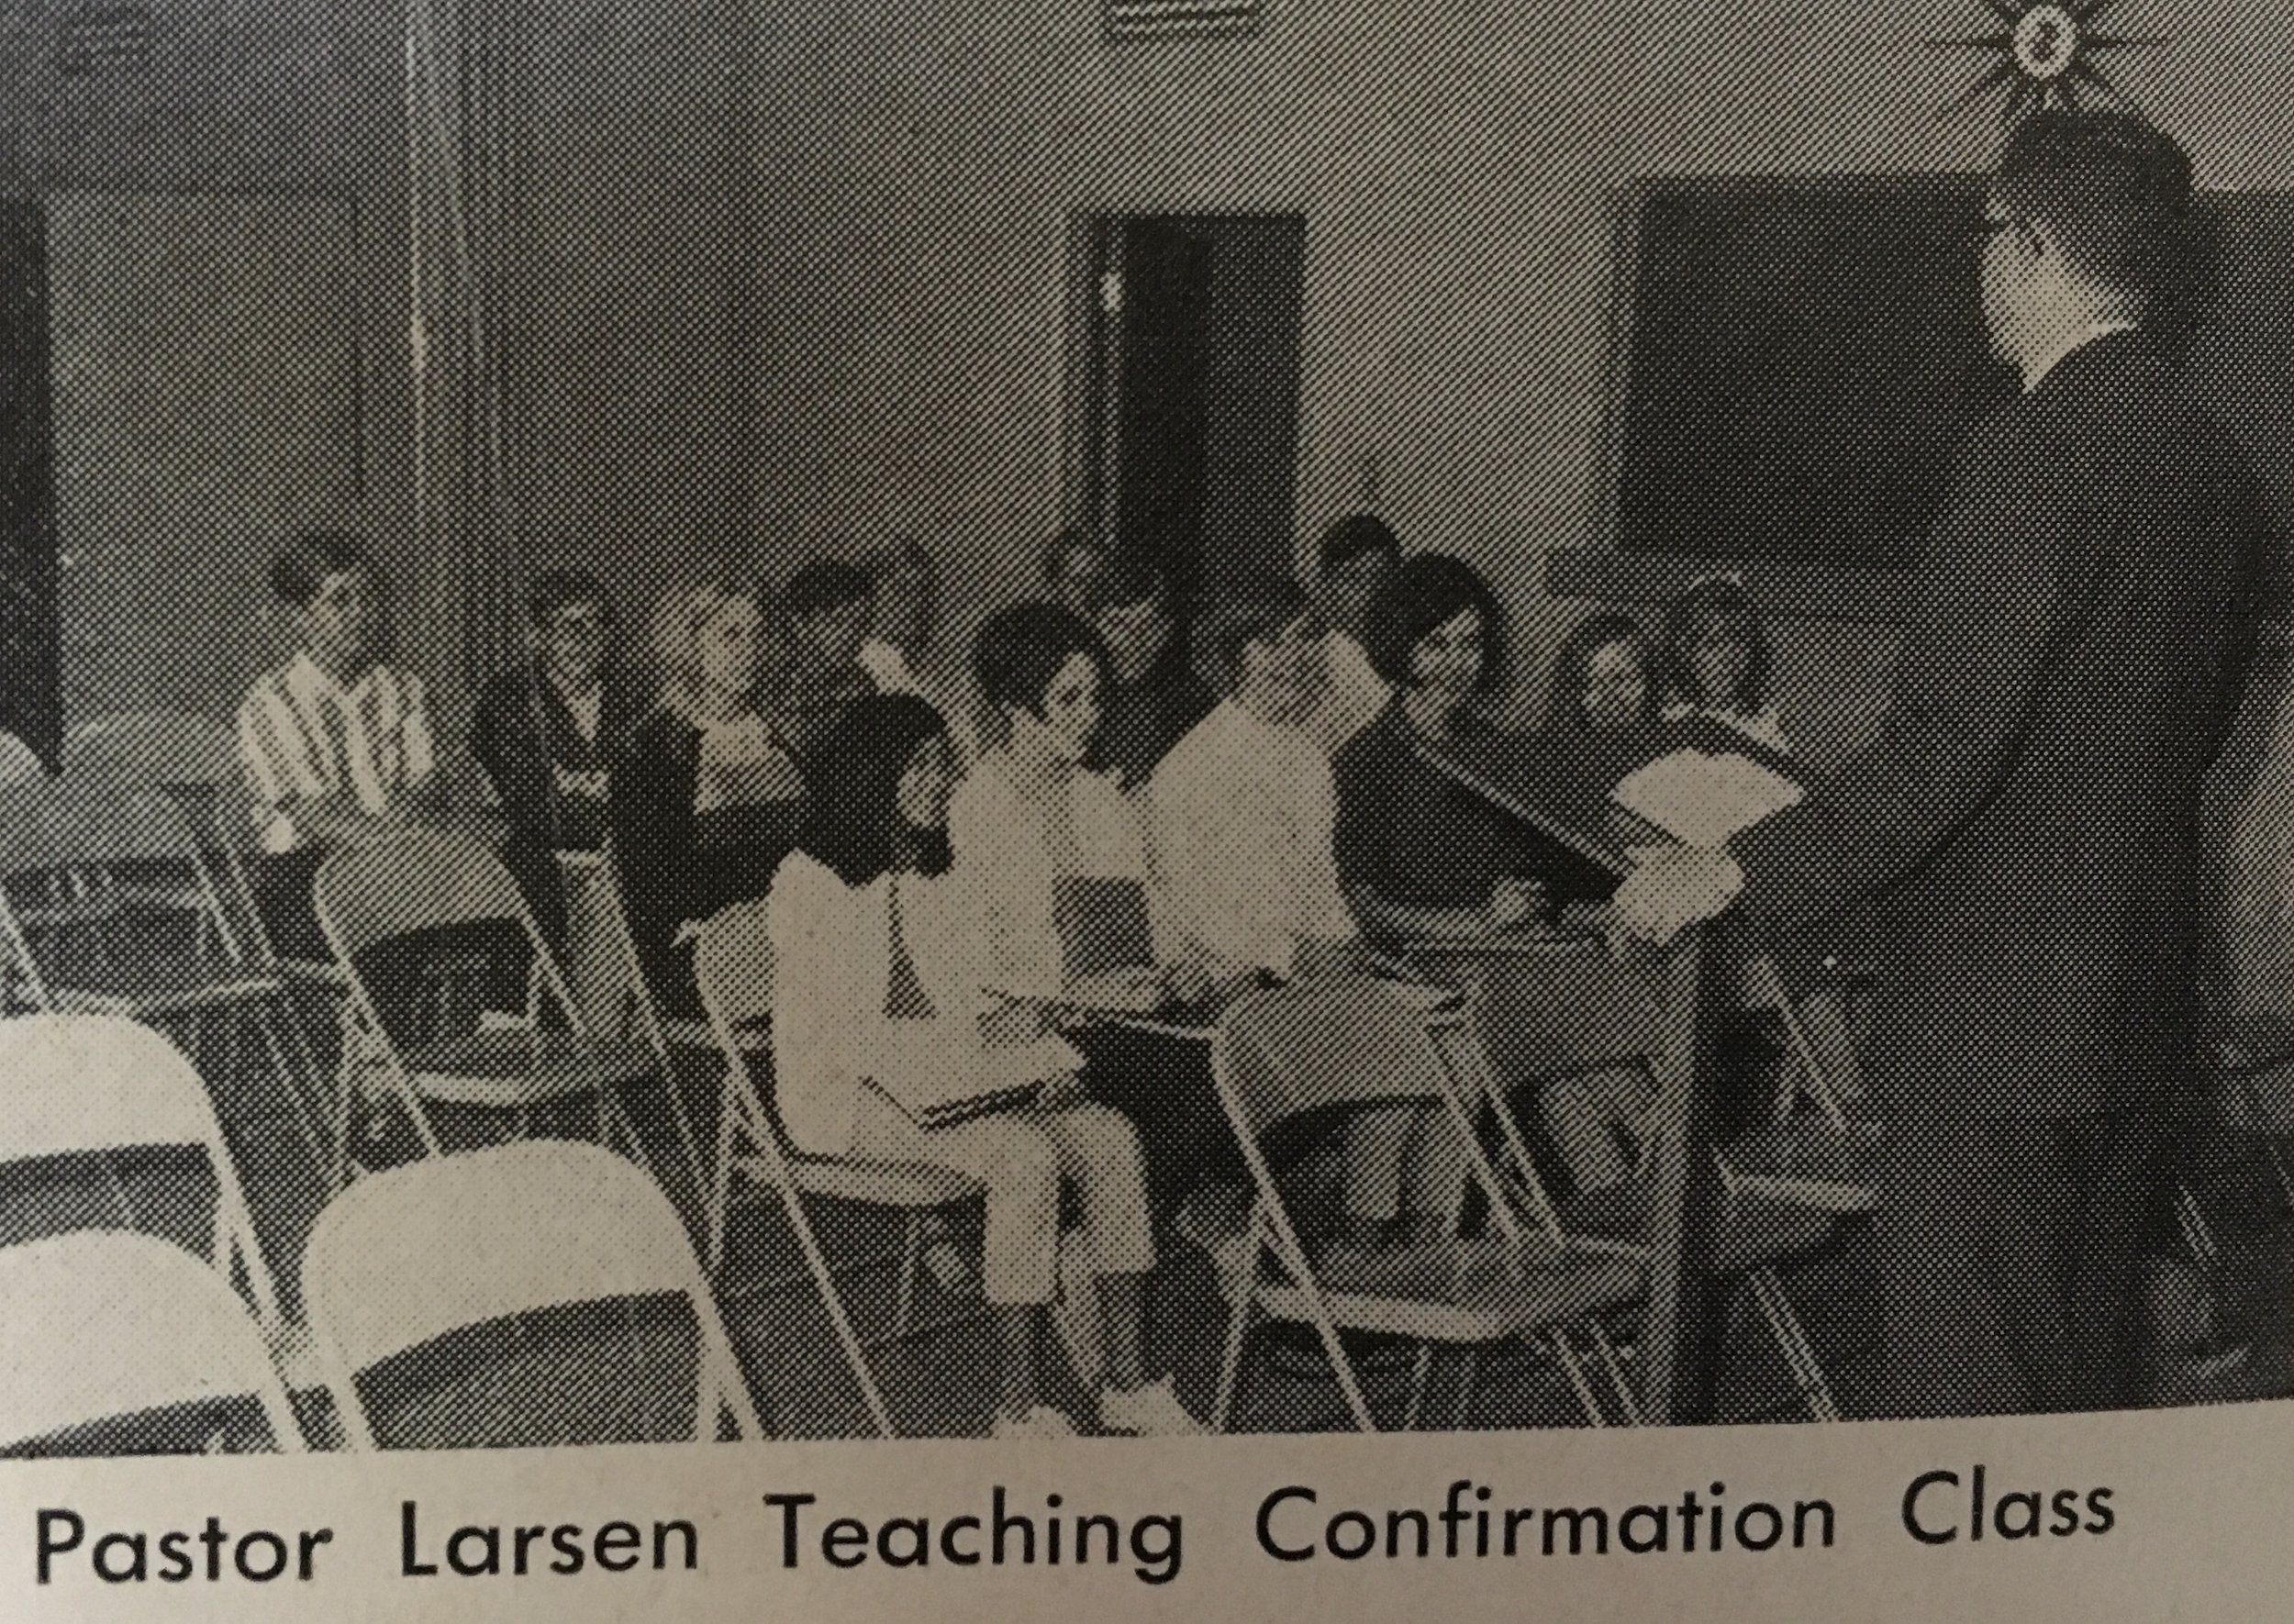 1968 confirmation class